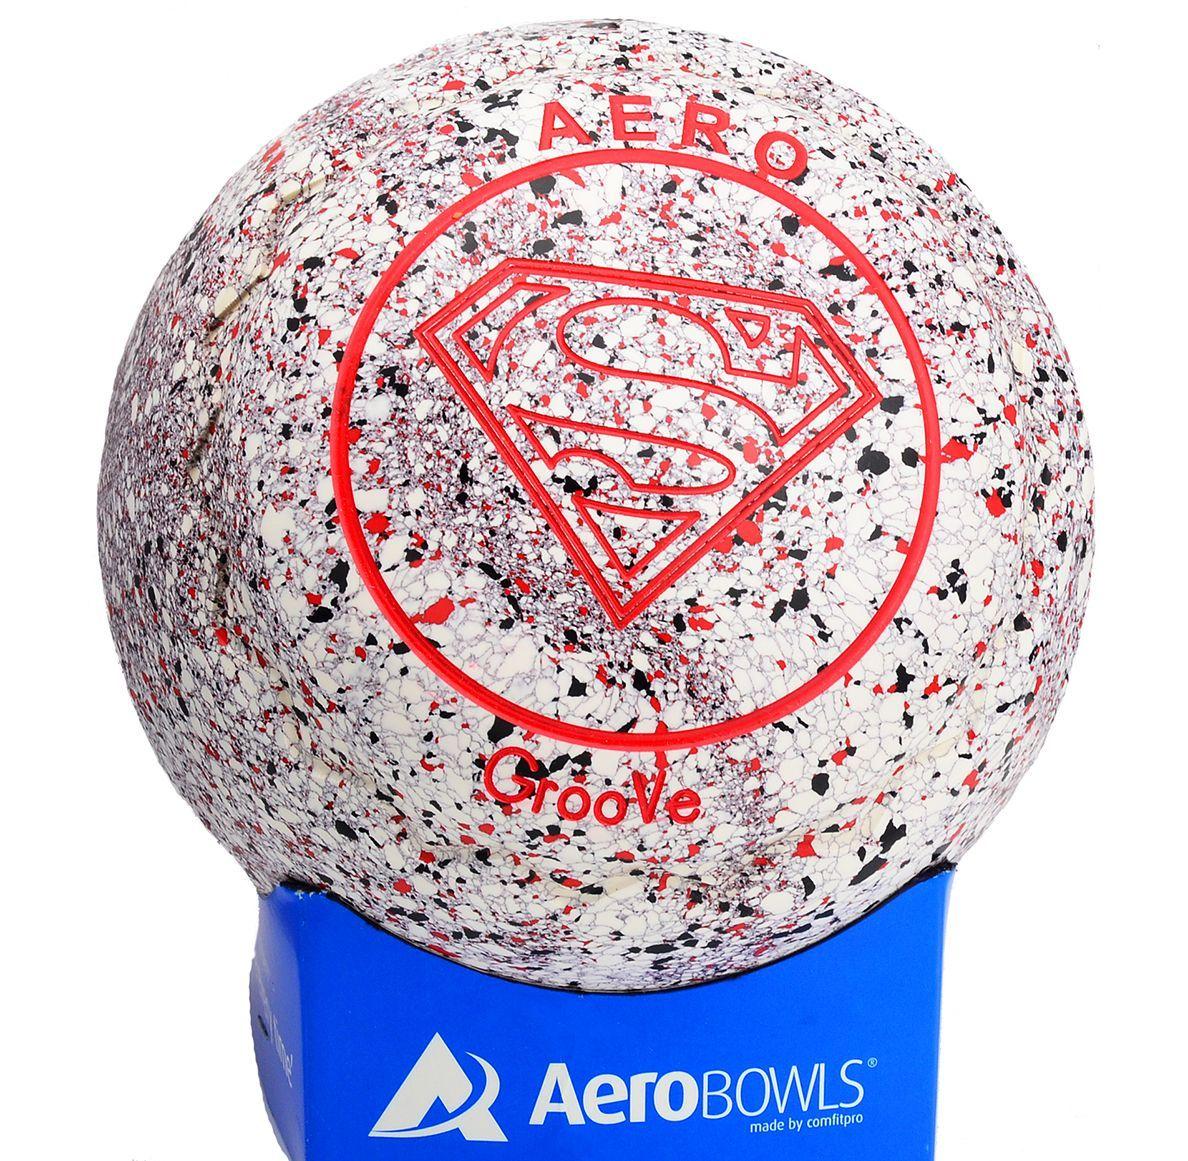 Sports Superman Logo - Aero GrooVe lawn bowl in Snow color with Superman logo. | Lawn bowls ...